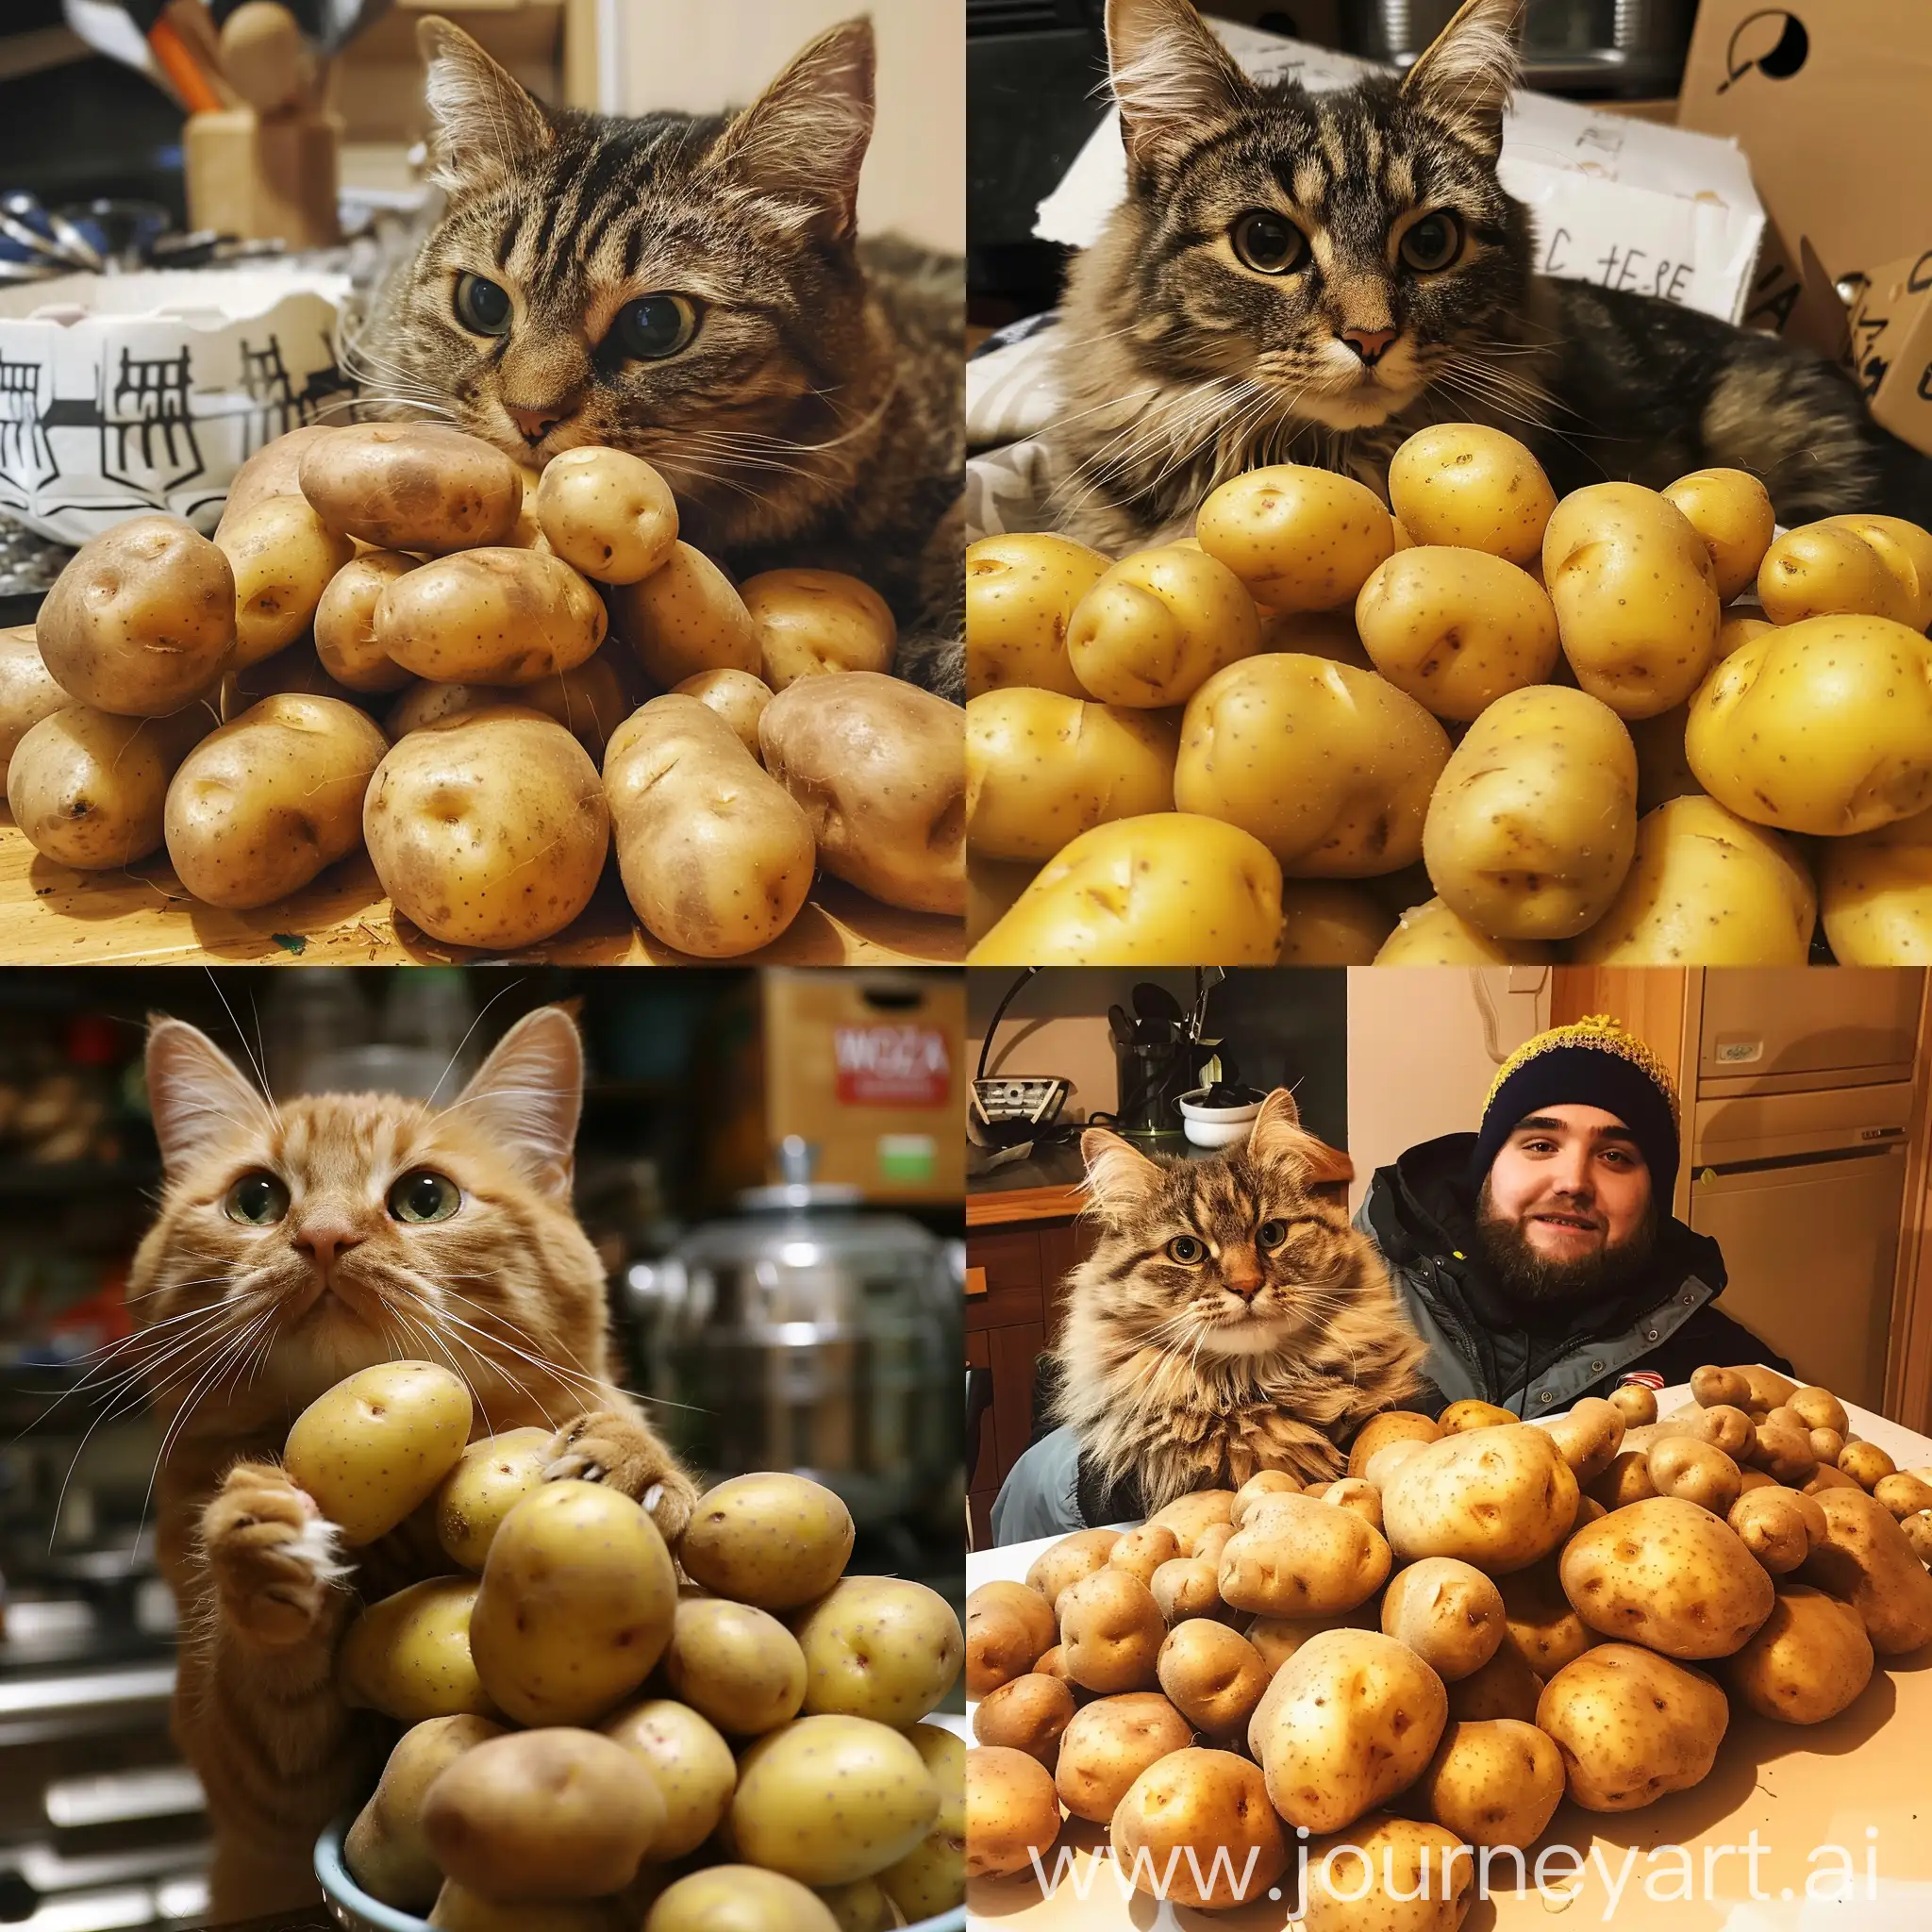 Hungry-Cat-Devours-Potatoes-Comical-Scene-of-Feline-Feast